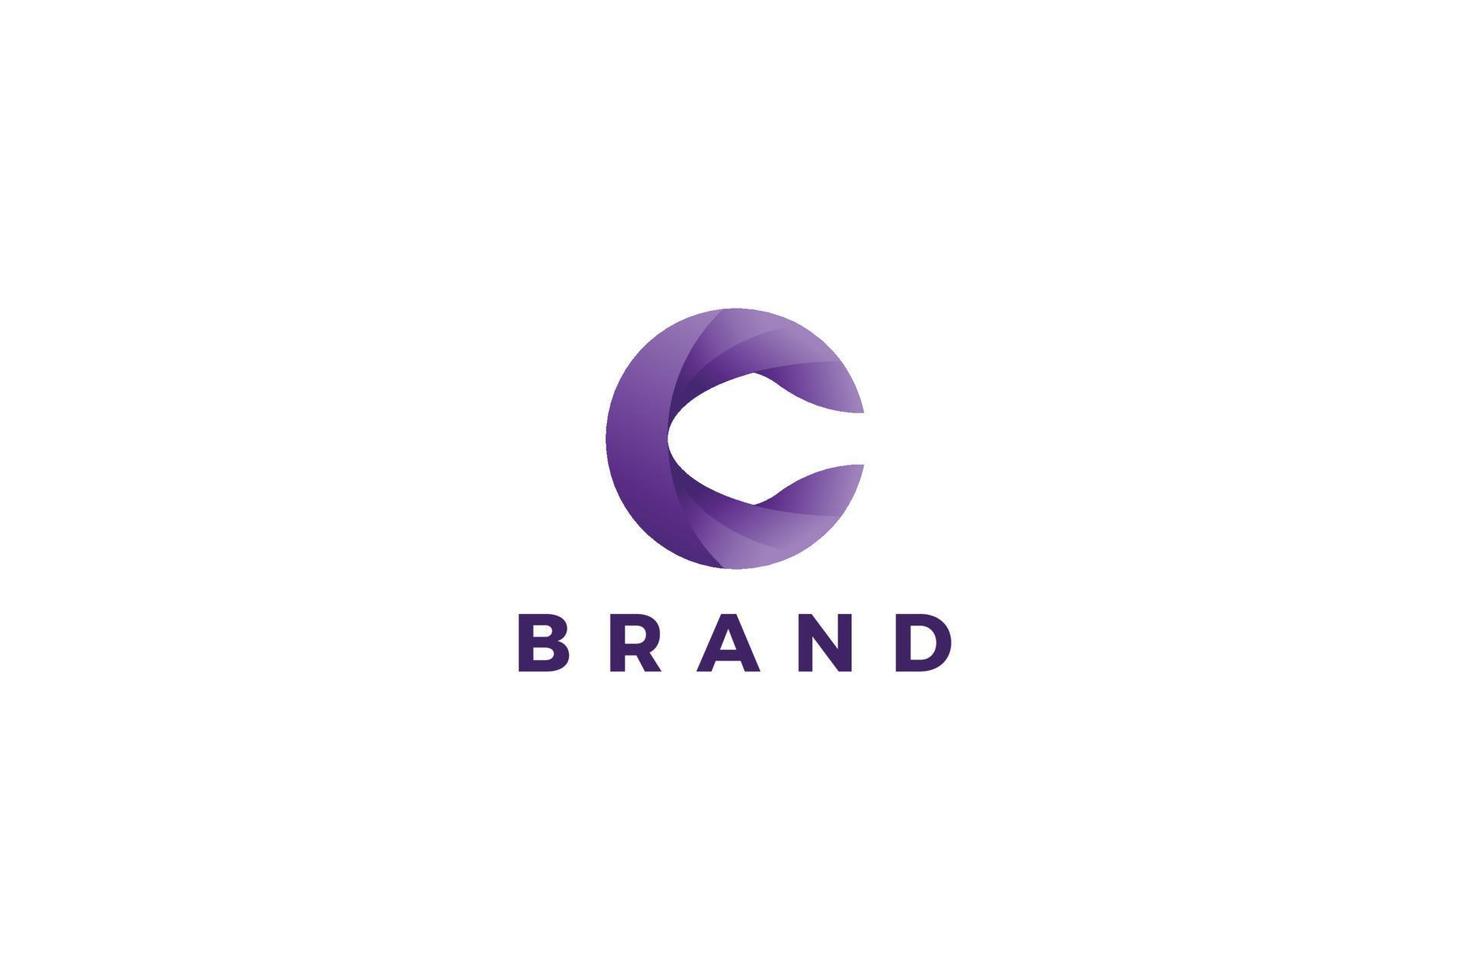 Letter C business logo design vector